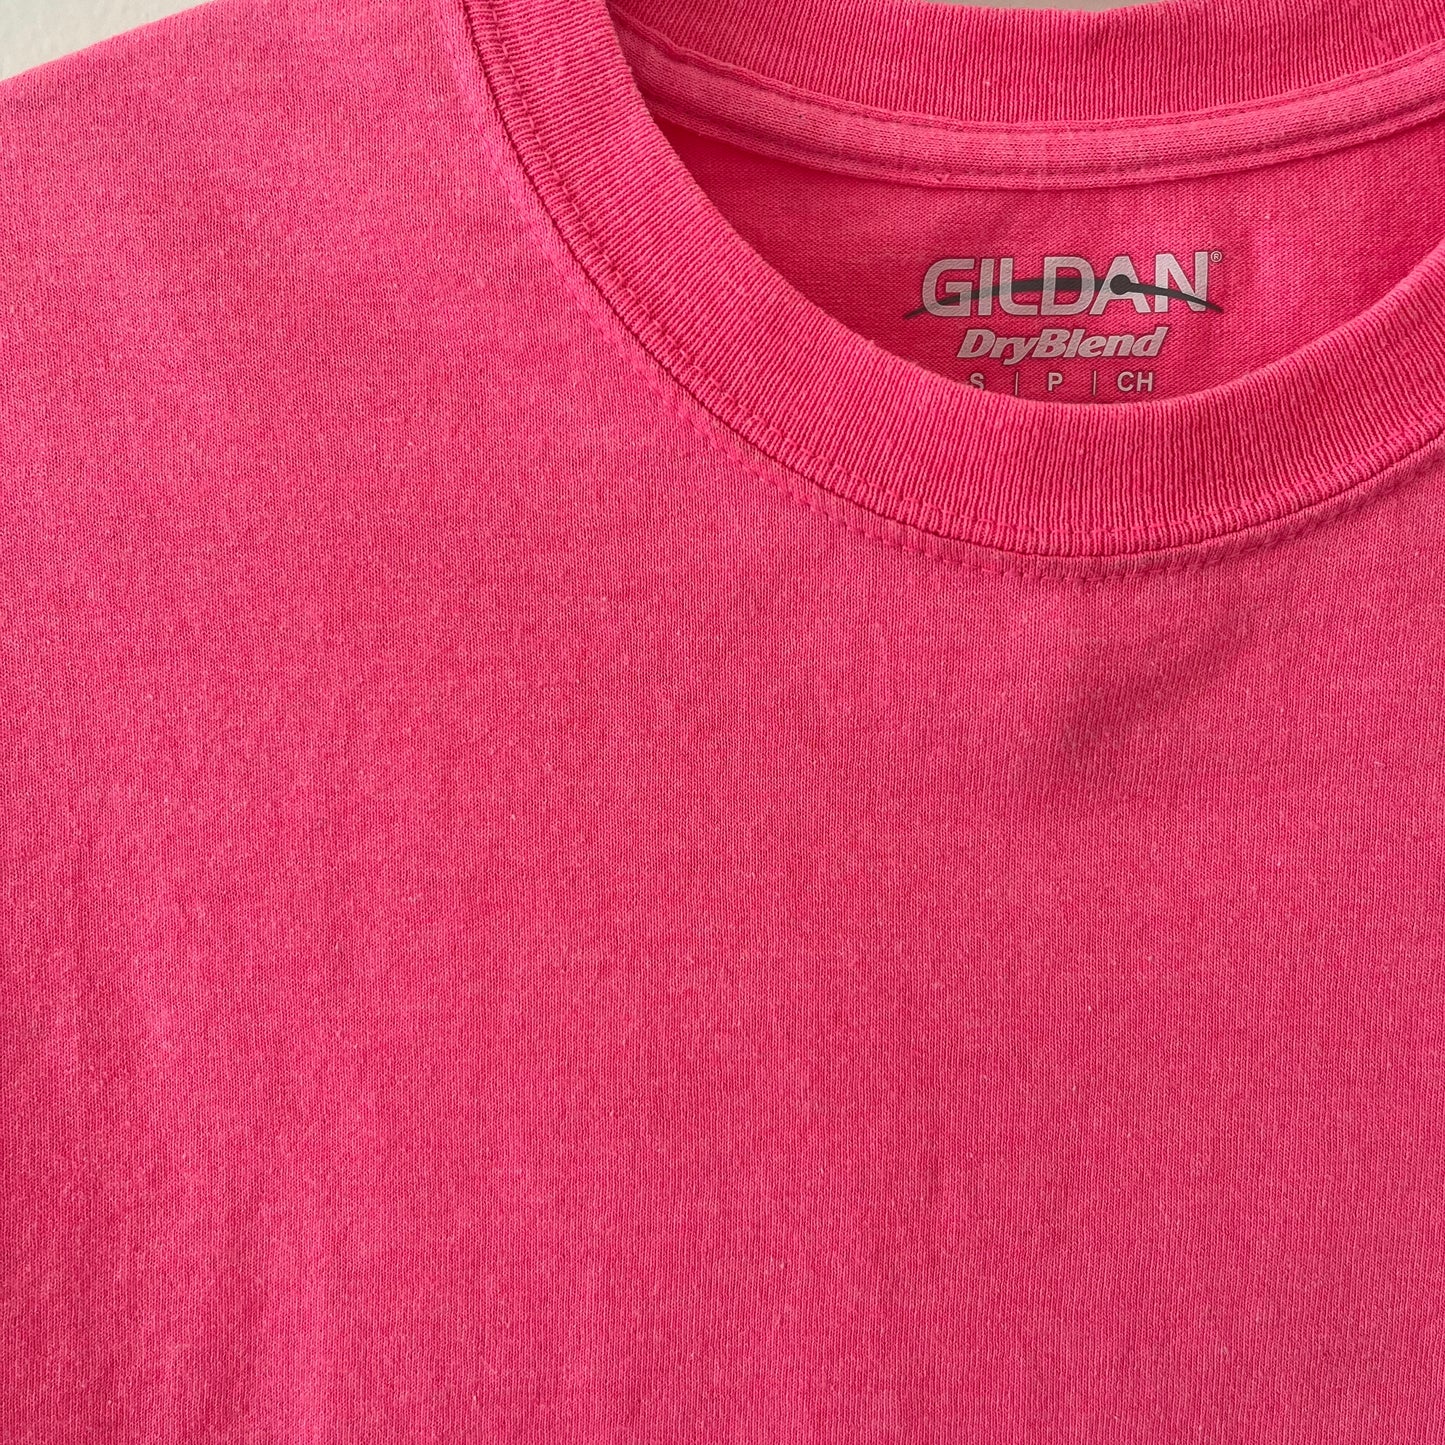 Neon Pink Gildan “Perfect Tee” (S)